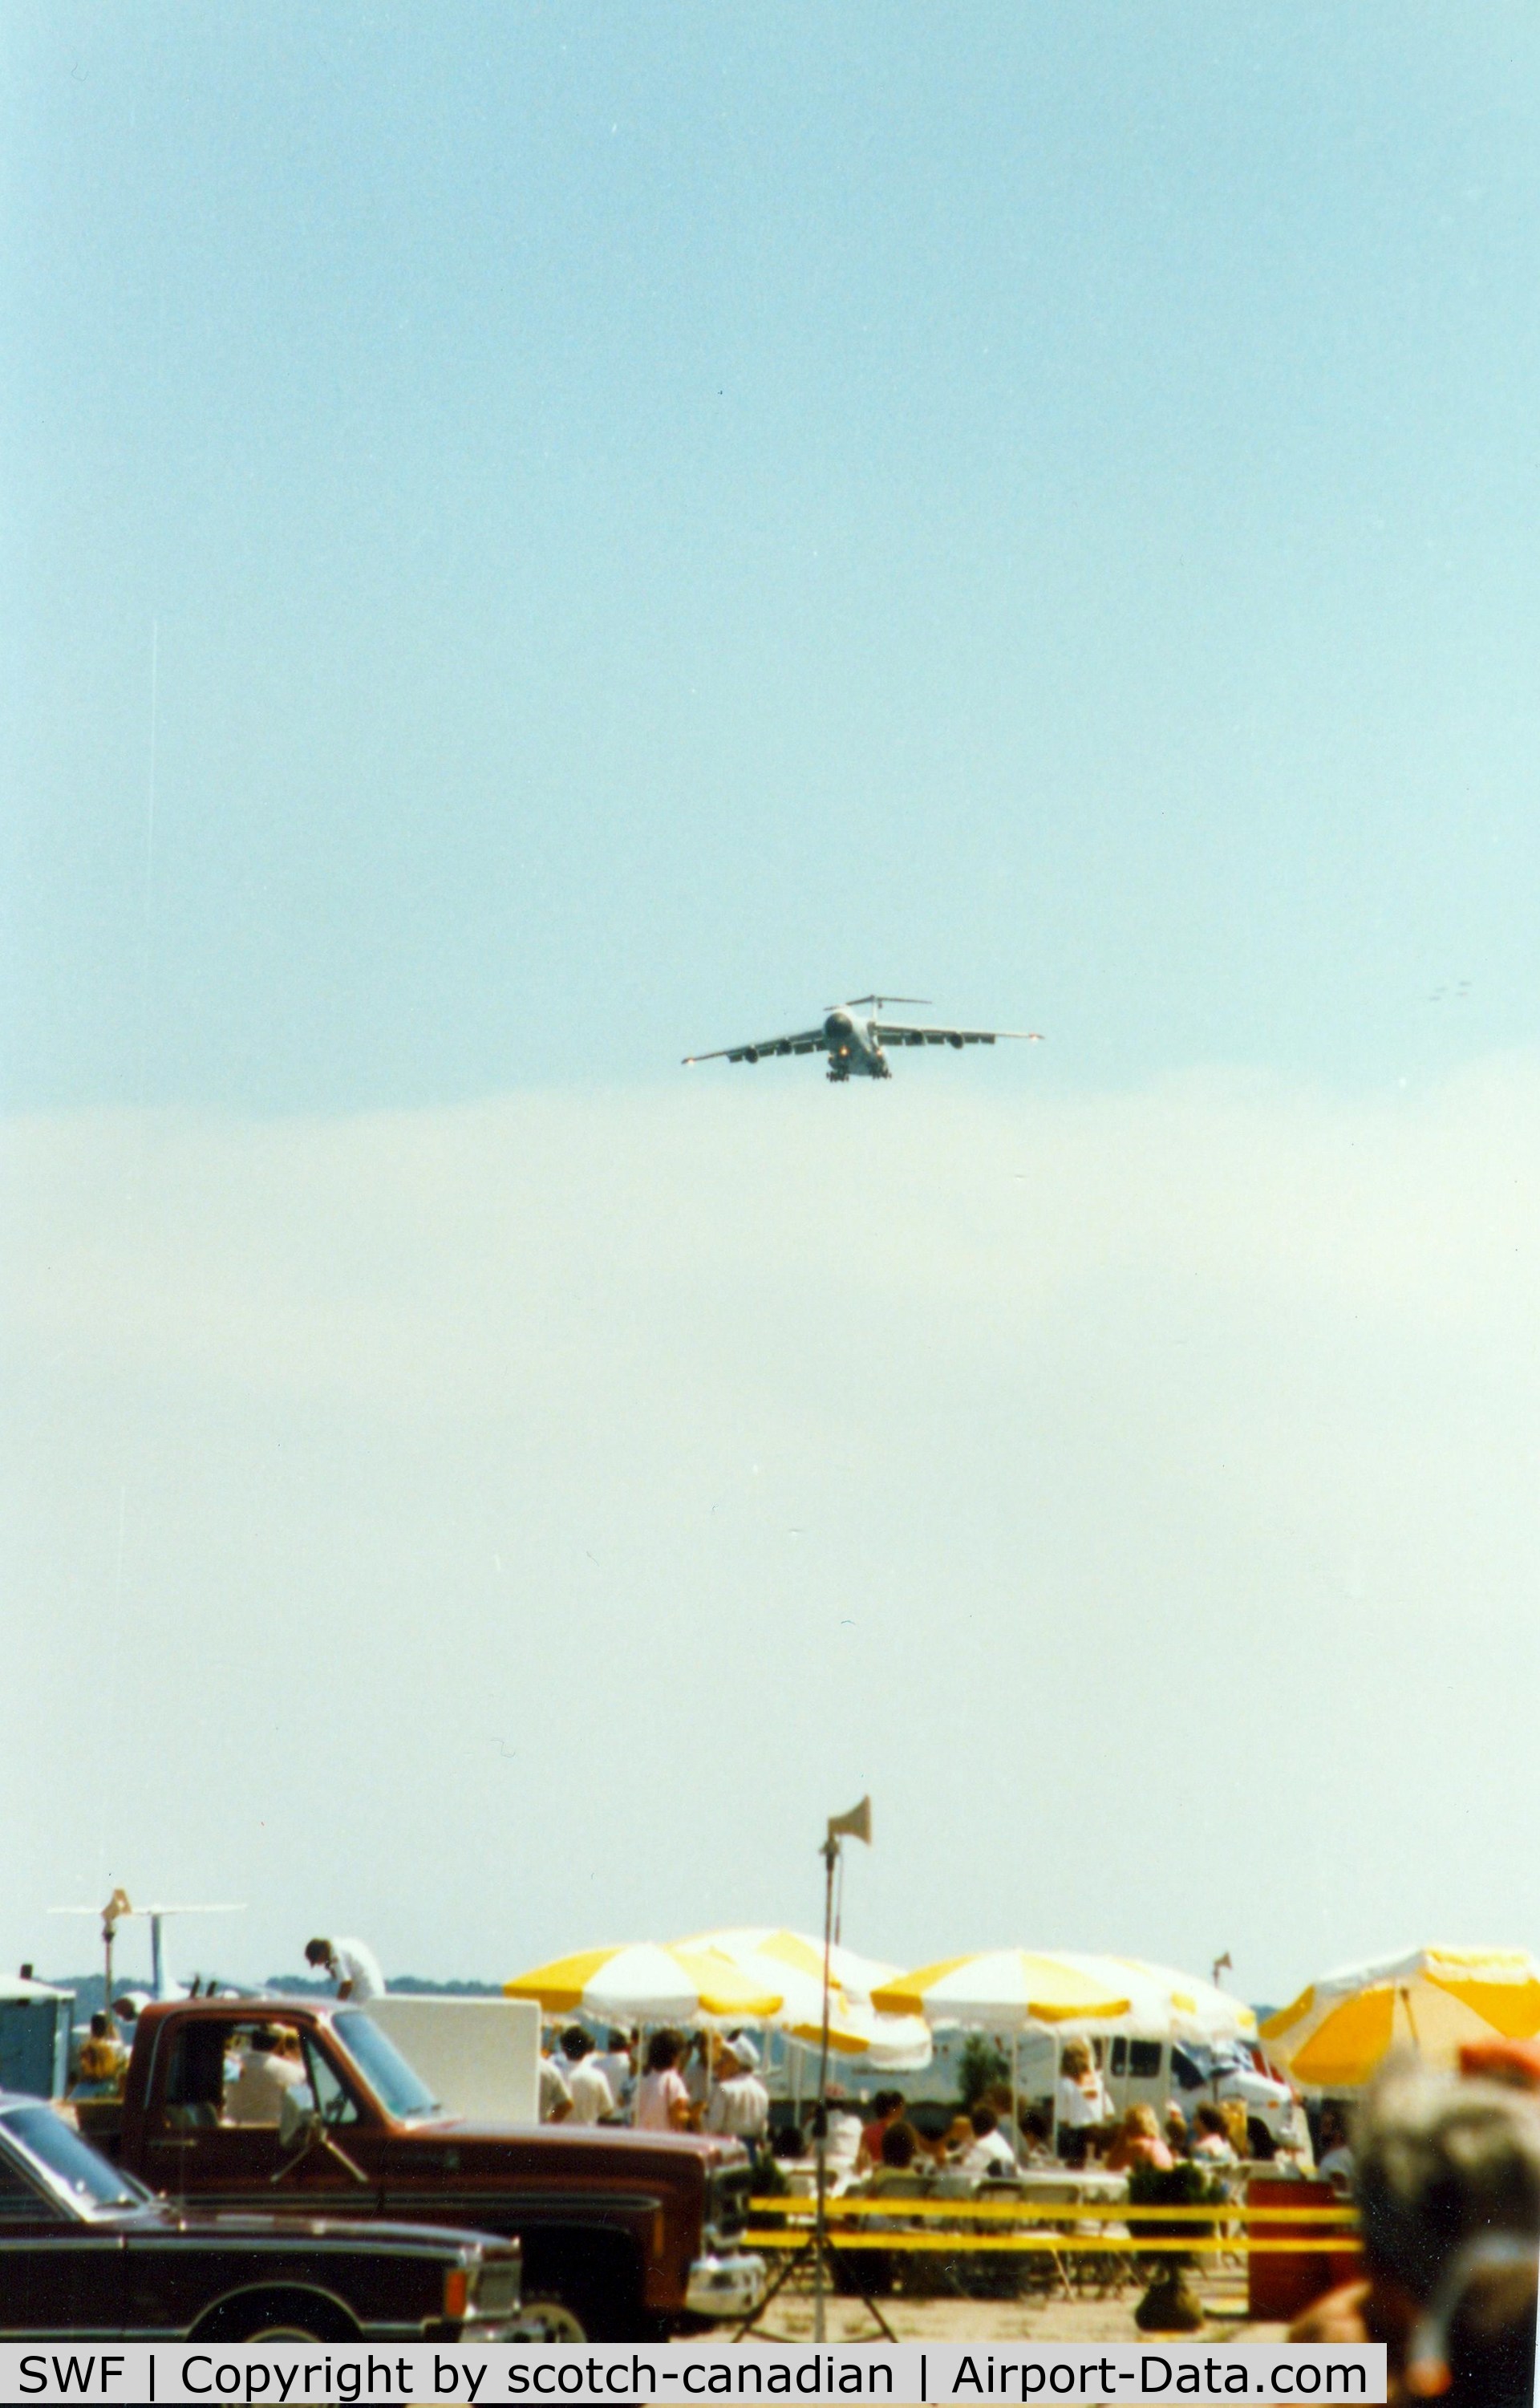 Stewart International Airport (SWF) - C-5A Galaxy at Stewart International Airport, Newburgh, NY - 1987